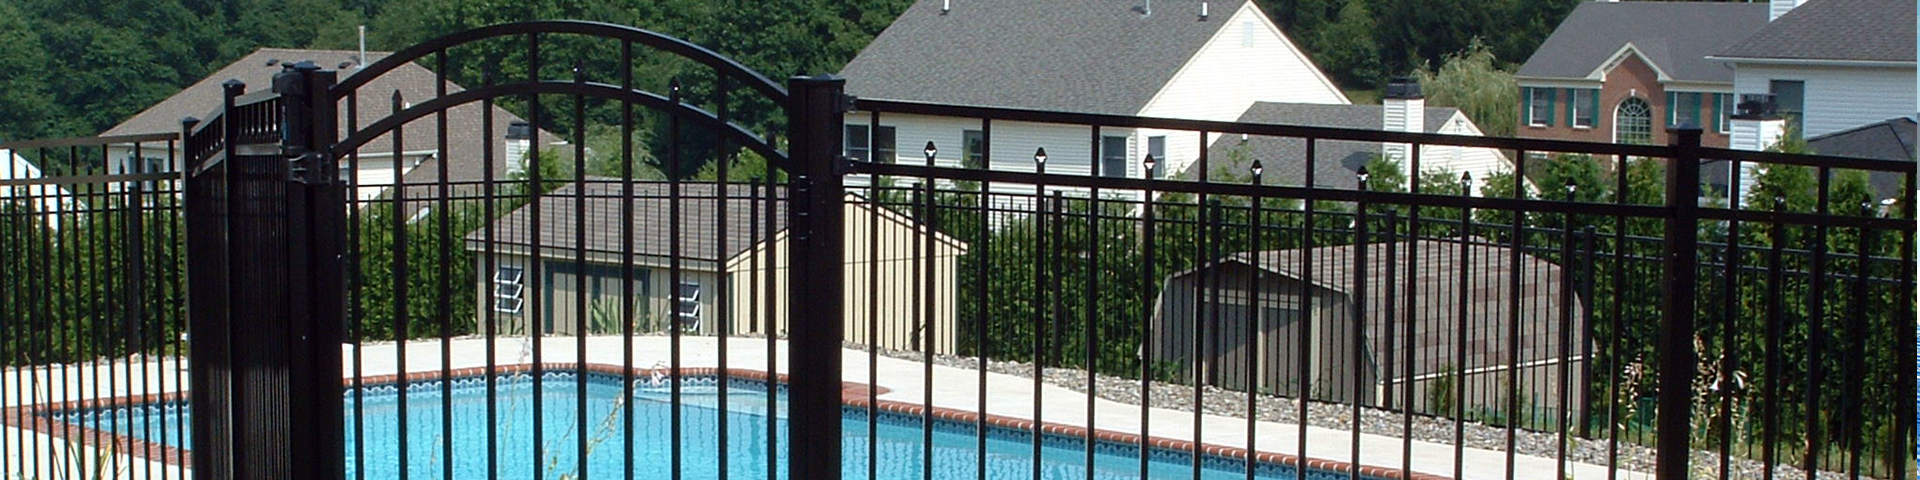 Inground Pool Fence